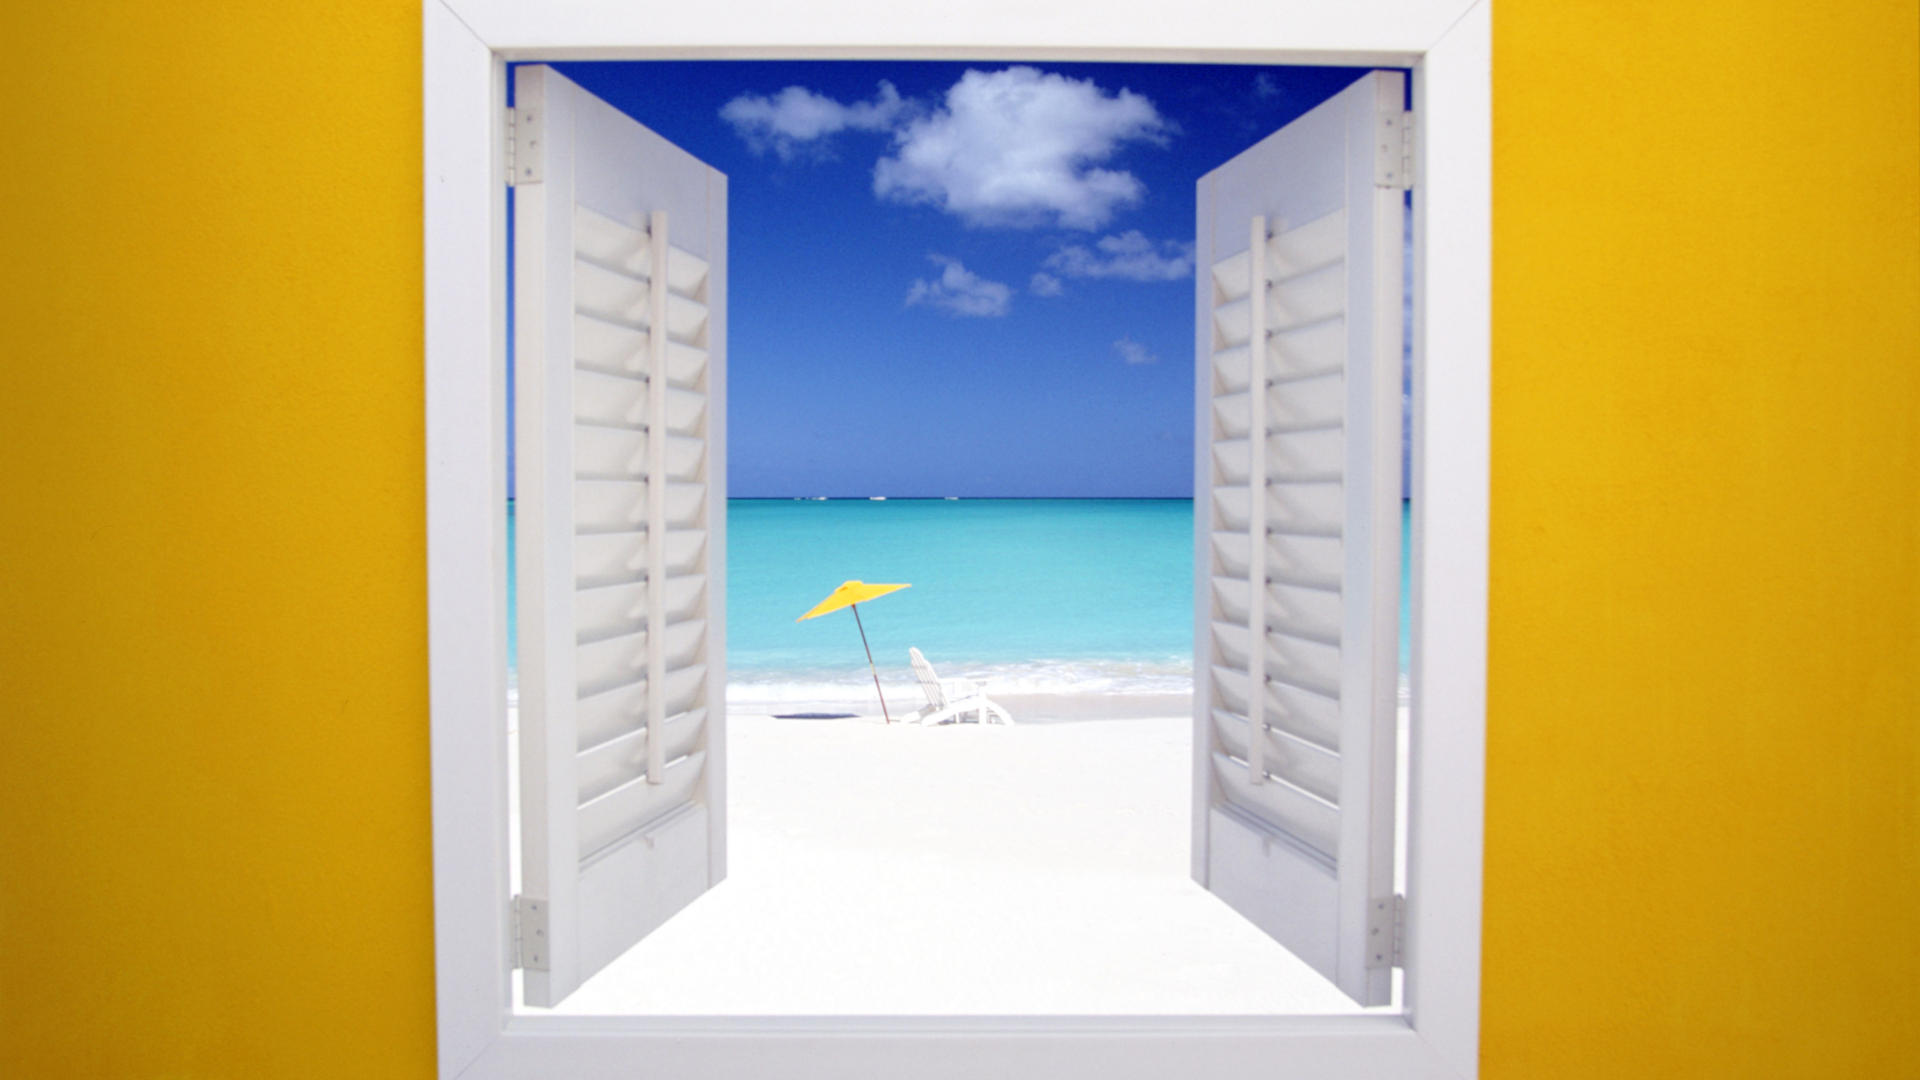 Caribbean Escape Download PowerPoint Backgrounds - PPT Backgrounds